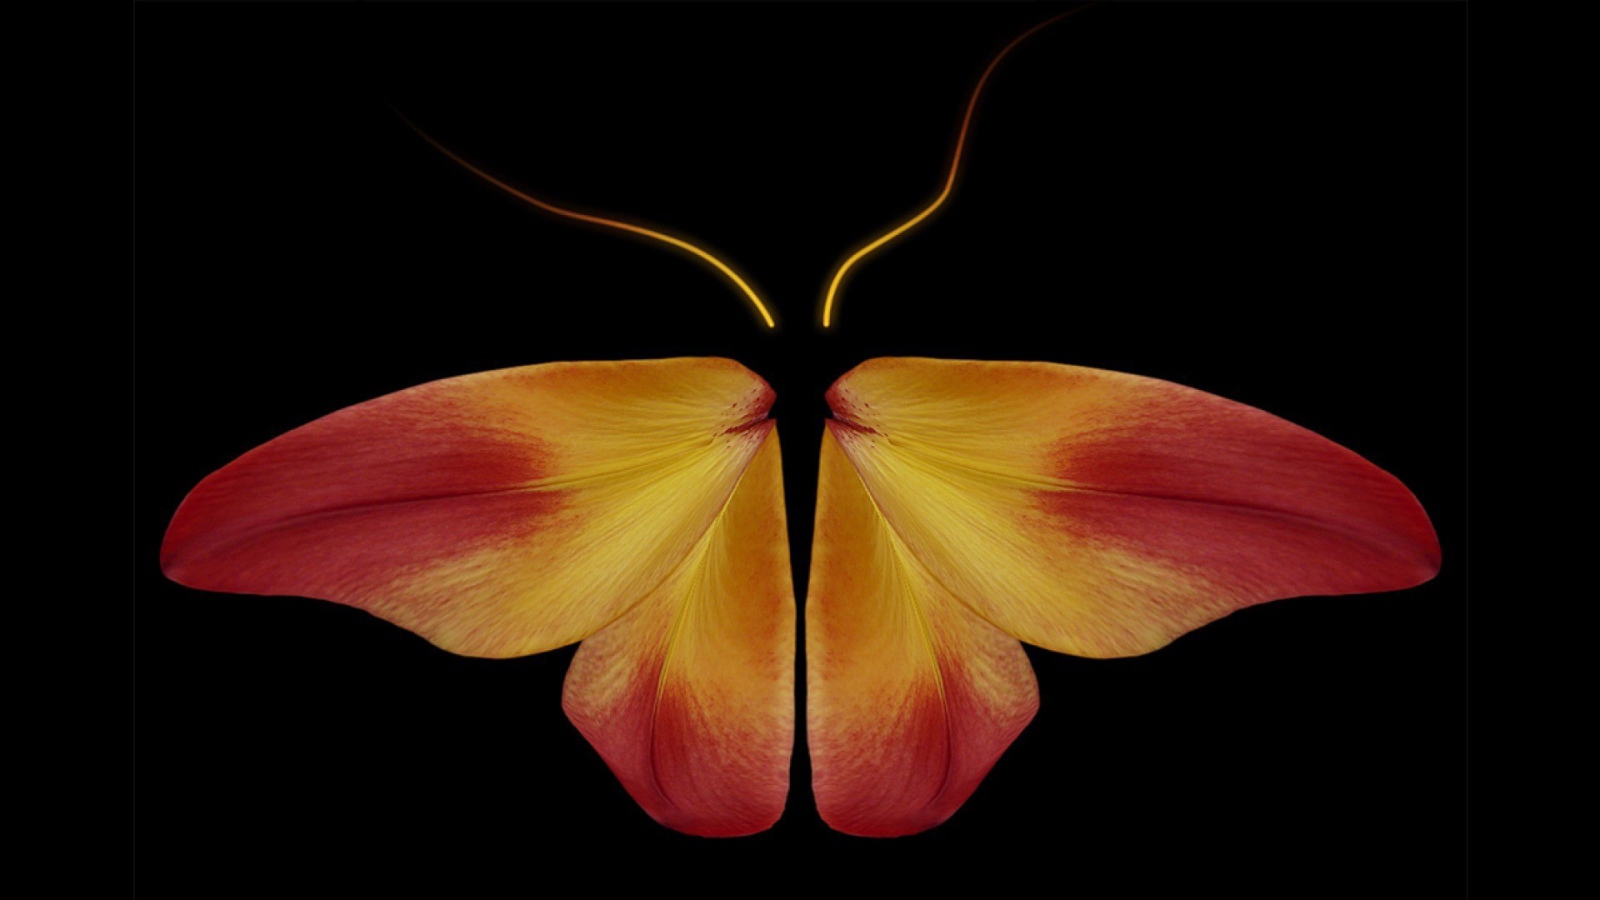 Butterfly from flower petals